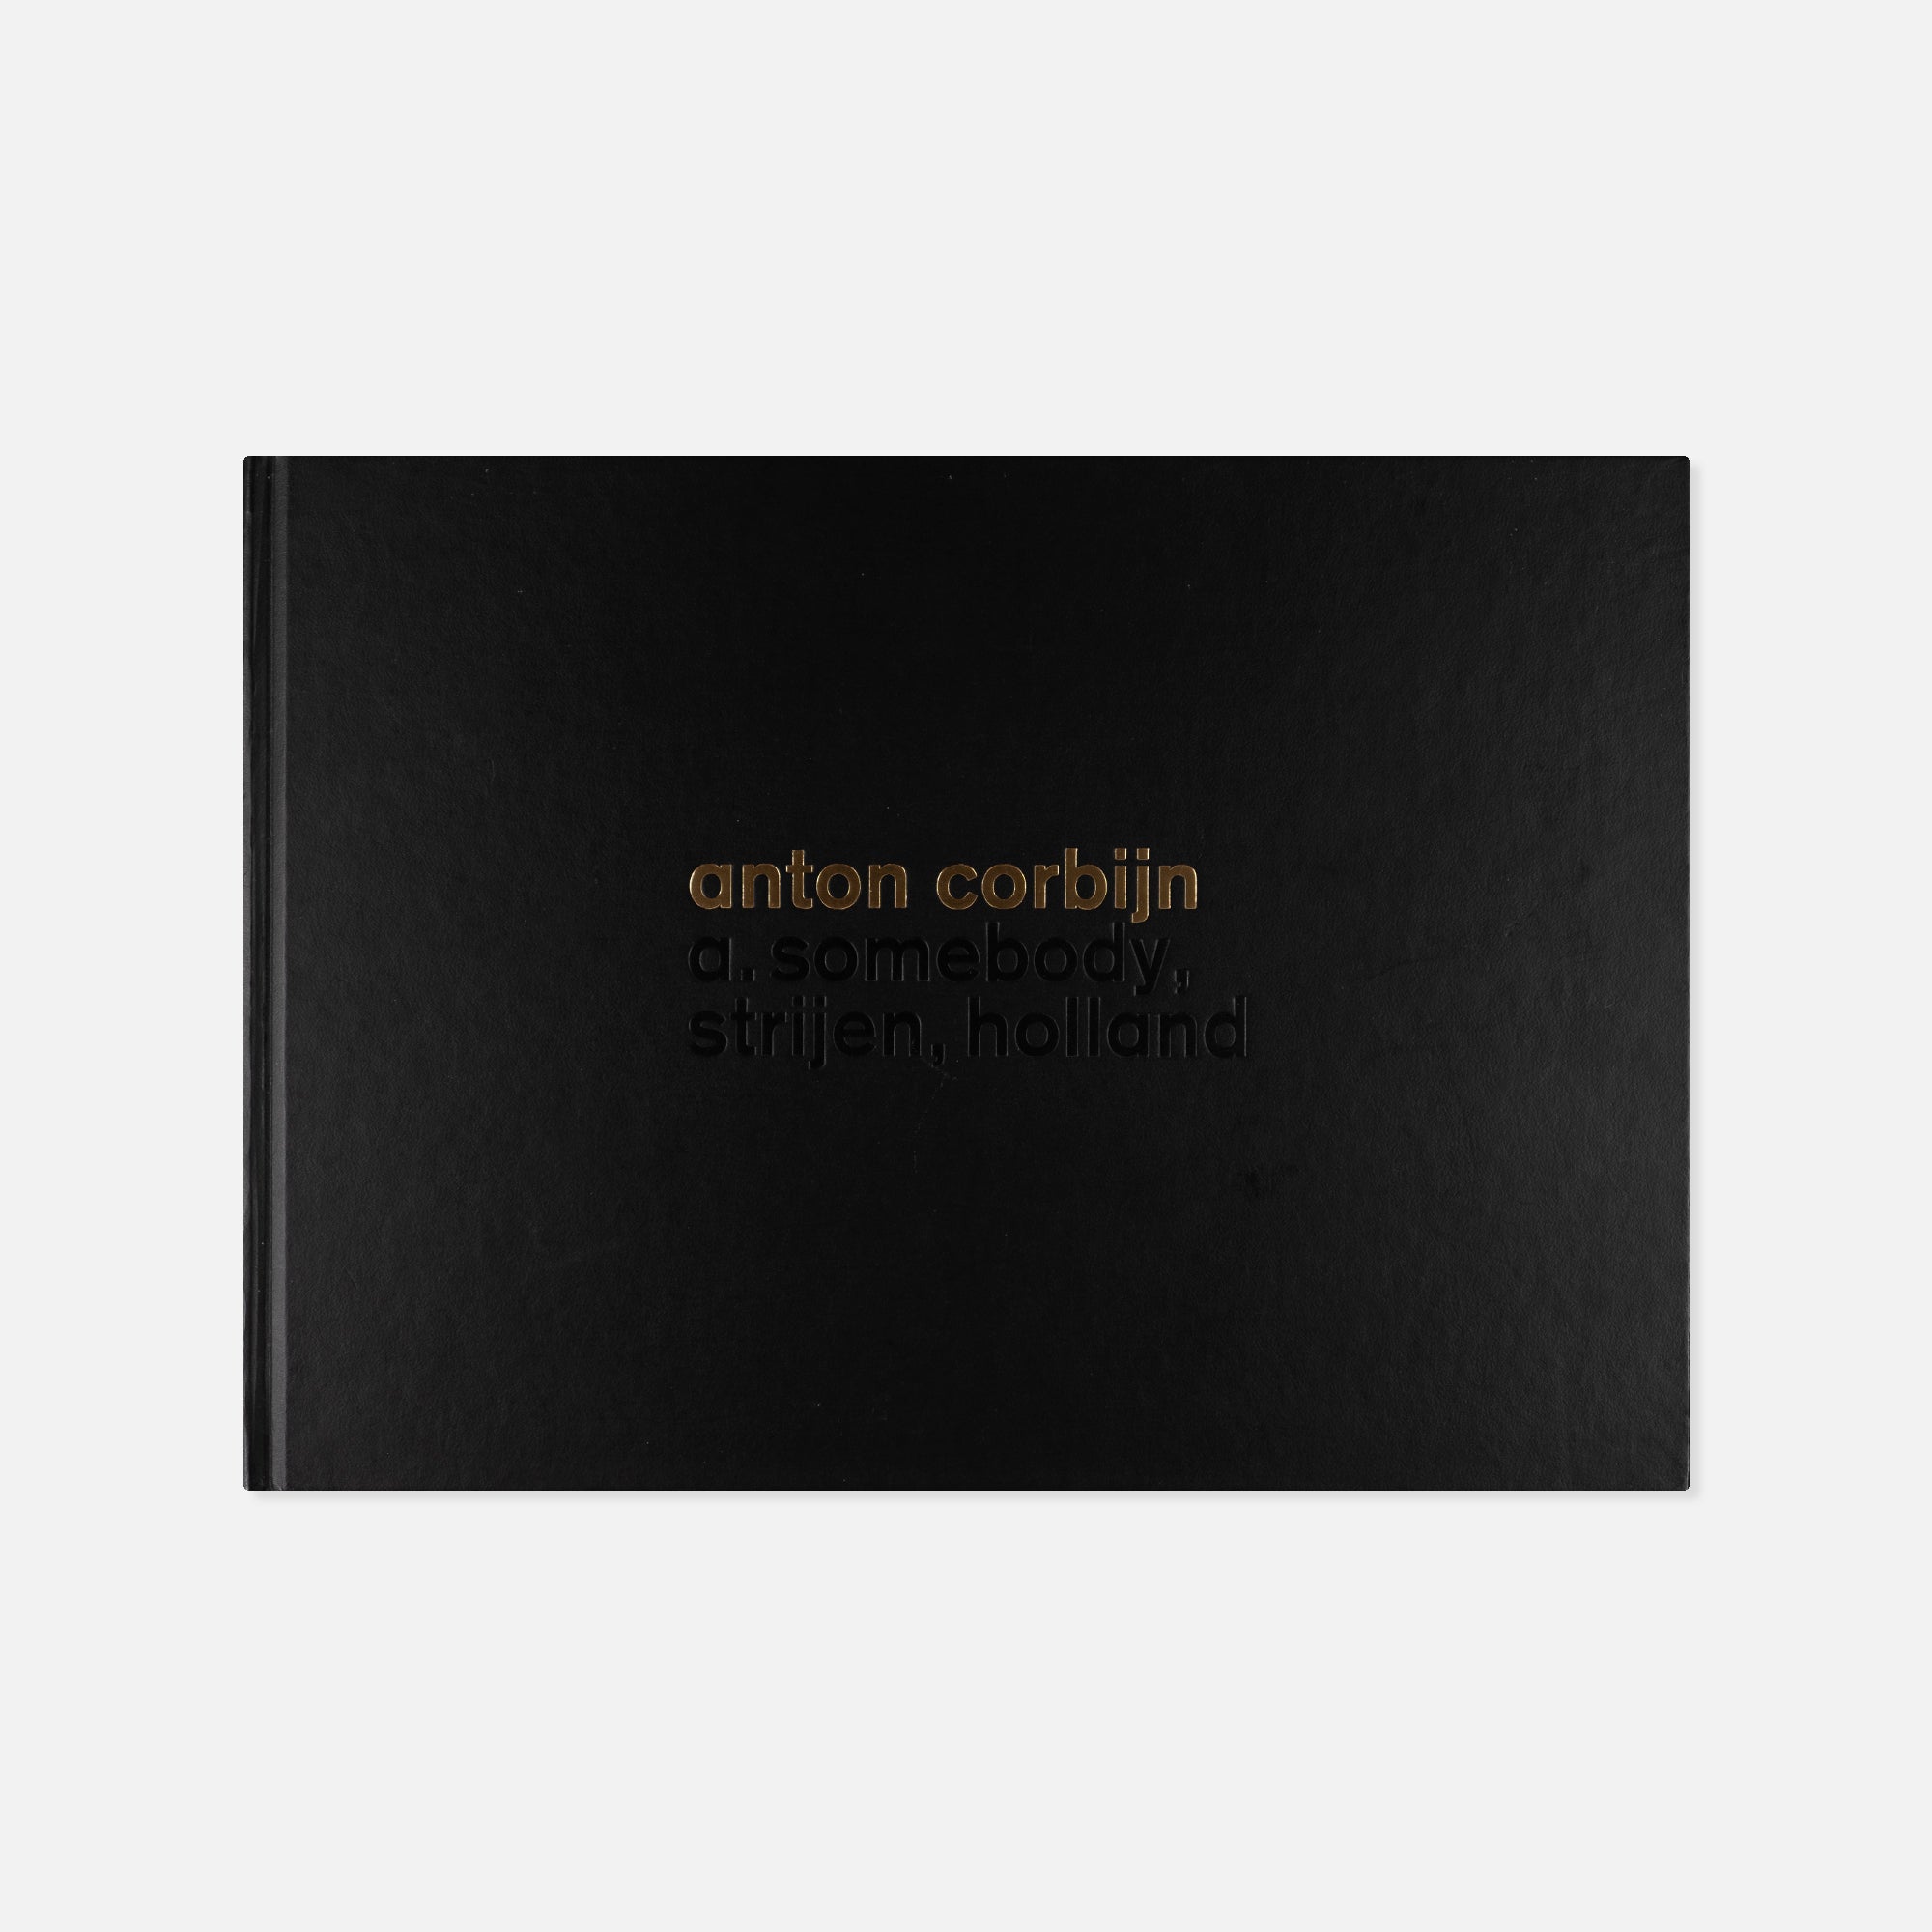 Anton Corbijn — A. Somebody, Strijen, Holland